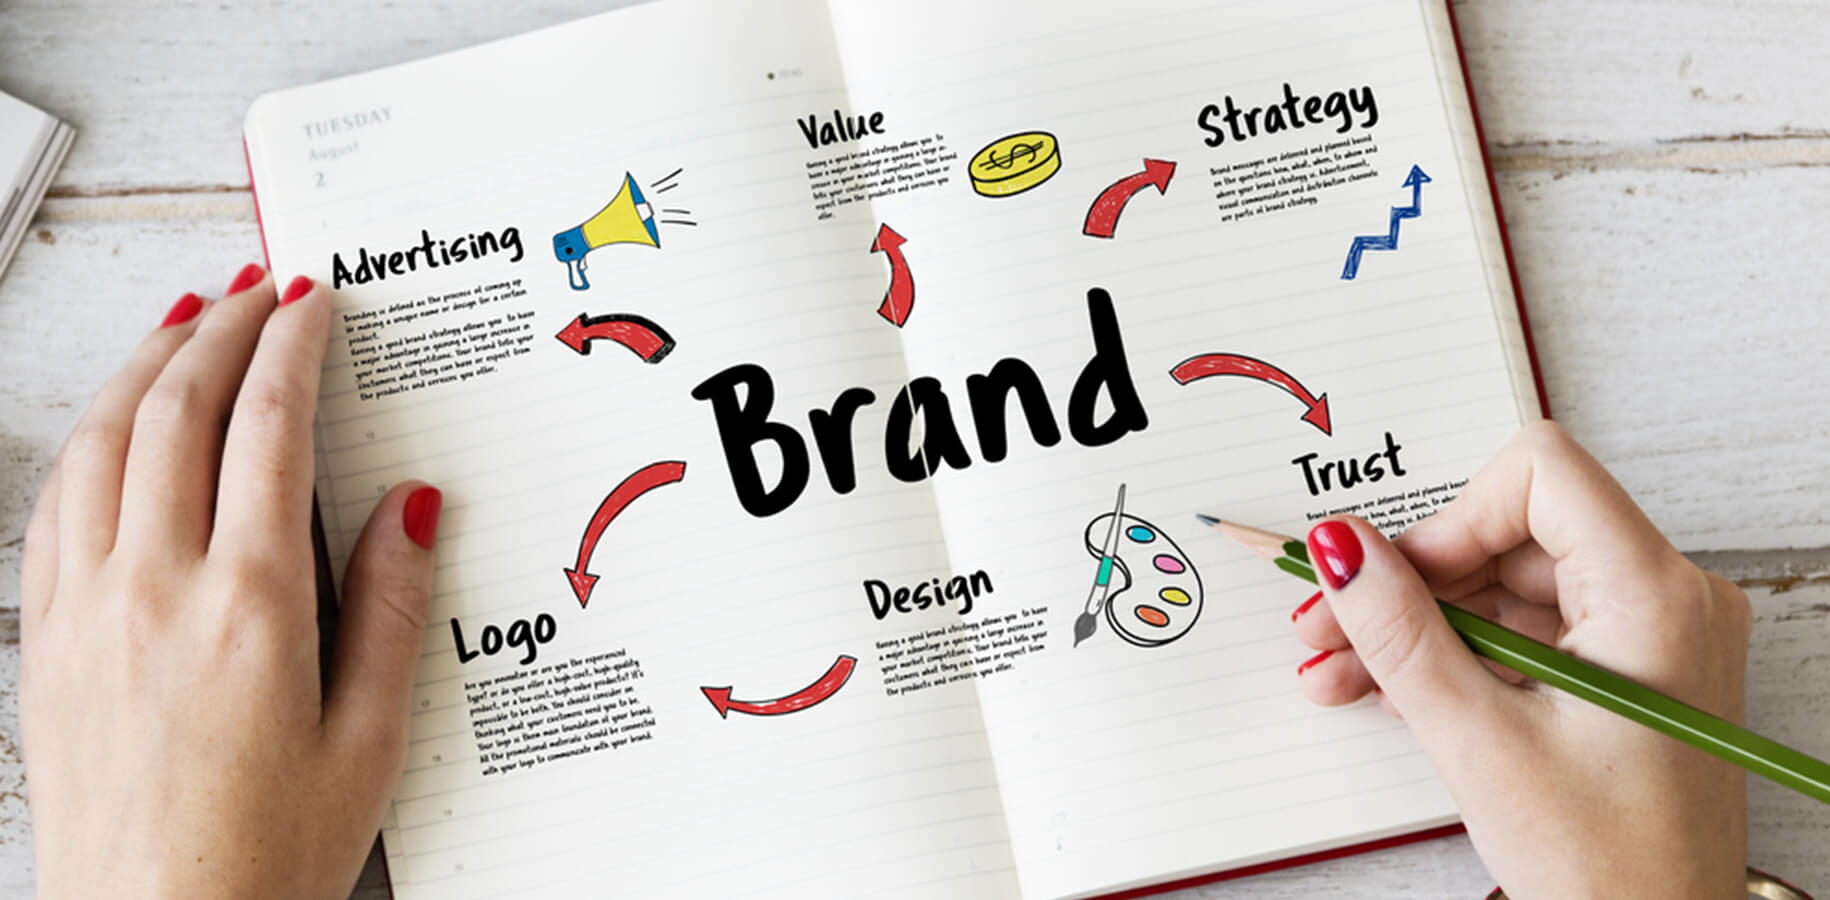 Brand marketing: the bigger picture